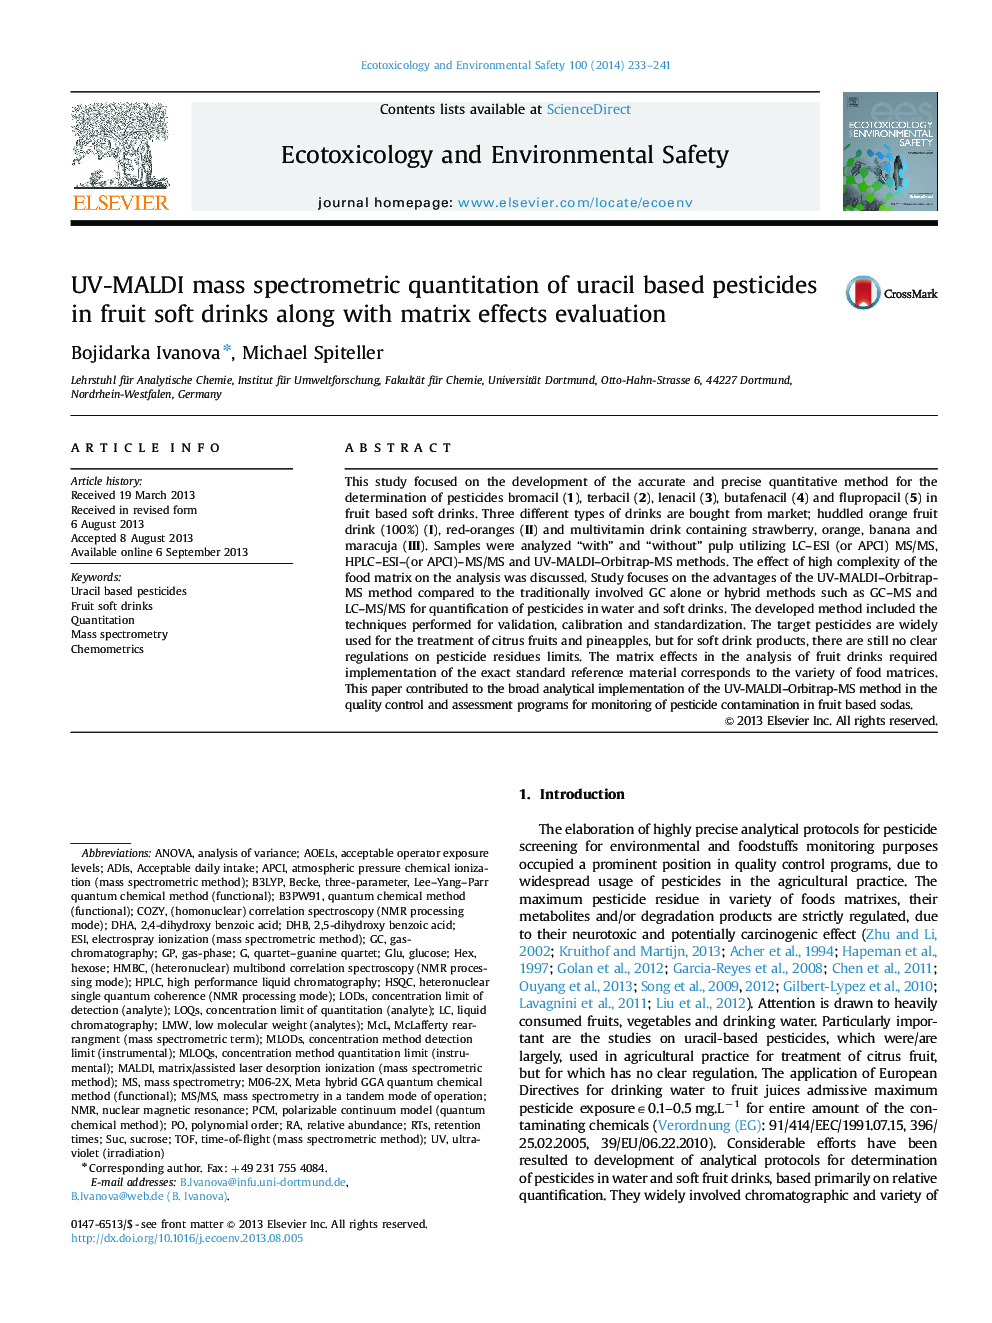 UV-MALDI mass spectrometric quantitation of uracil based pesticides in fruit soft drinks along with matrix effects evaluation